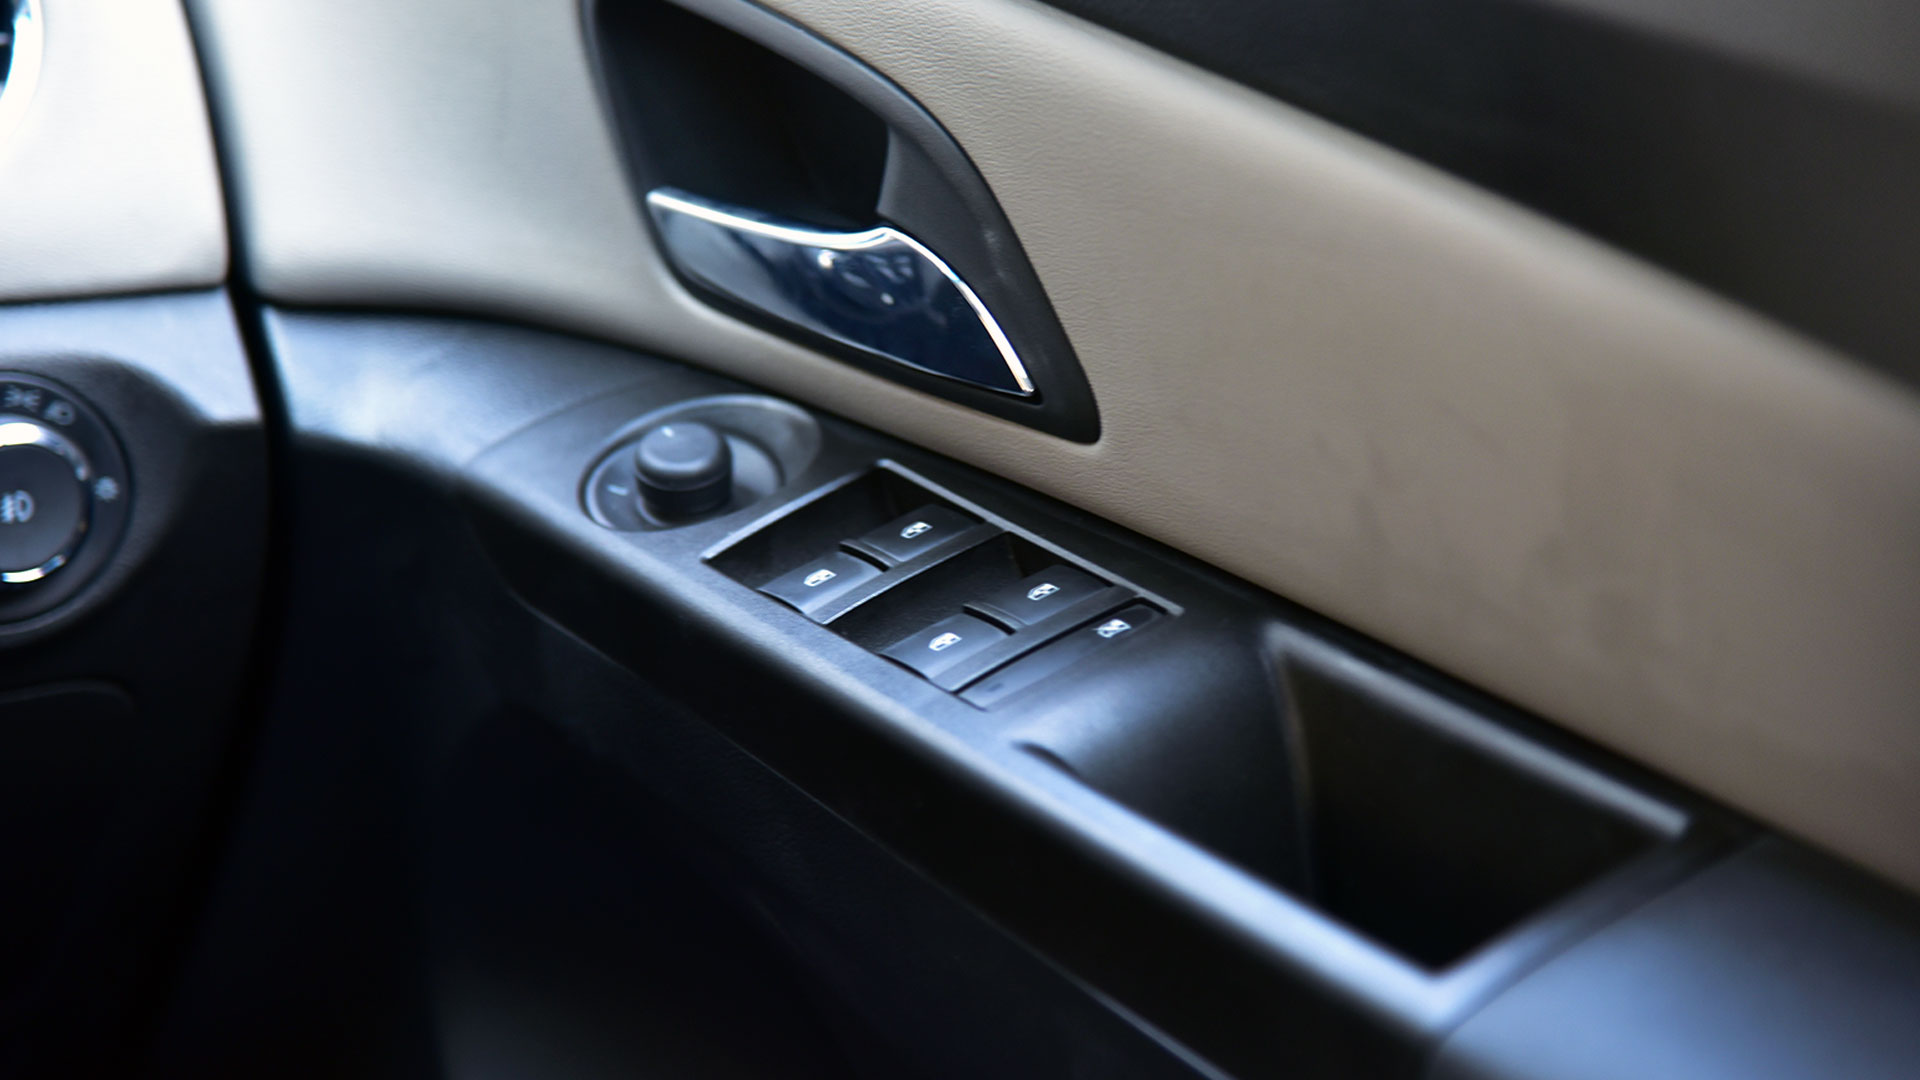 Chevrolet Cruze 2016 LTZ Interior